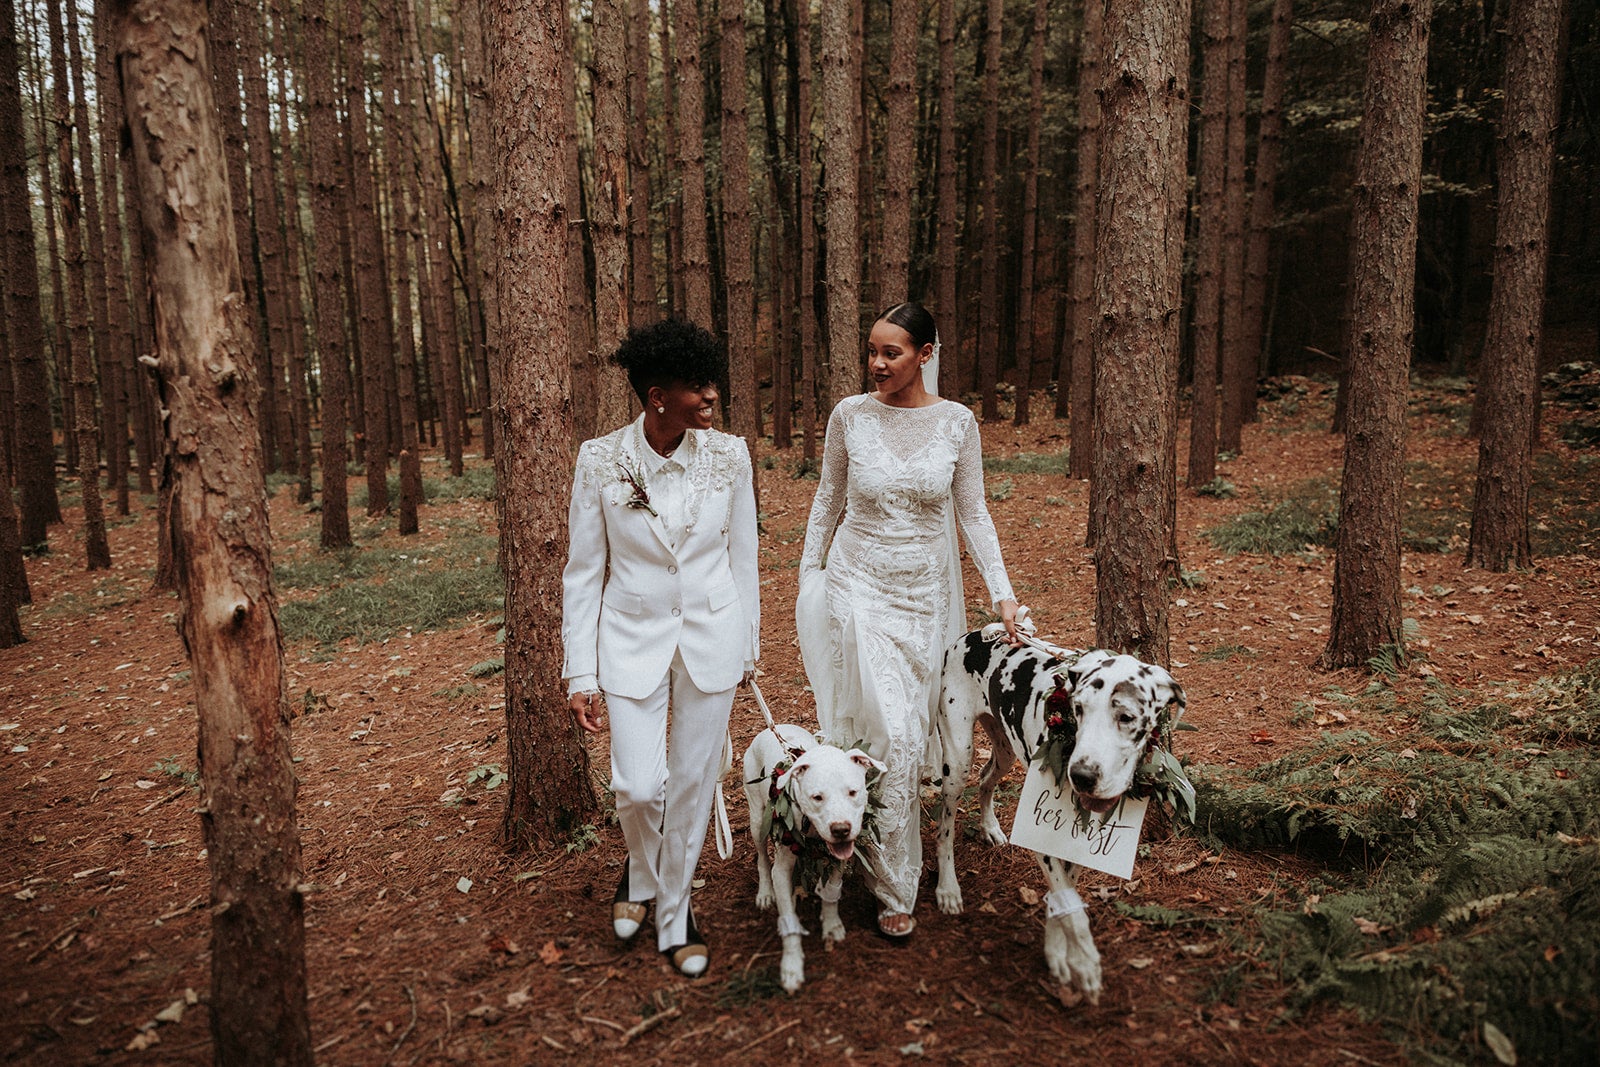 Bridal Bliss: Kris And Talisa Made Magic At Their Woodsy New York Wedding